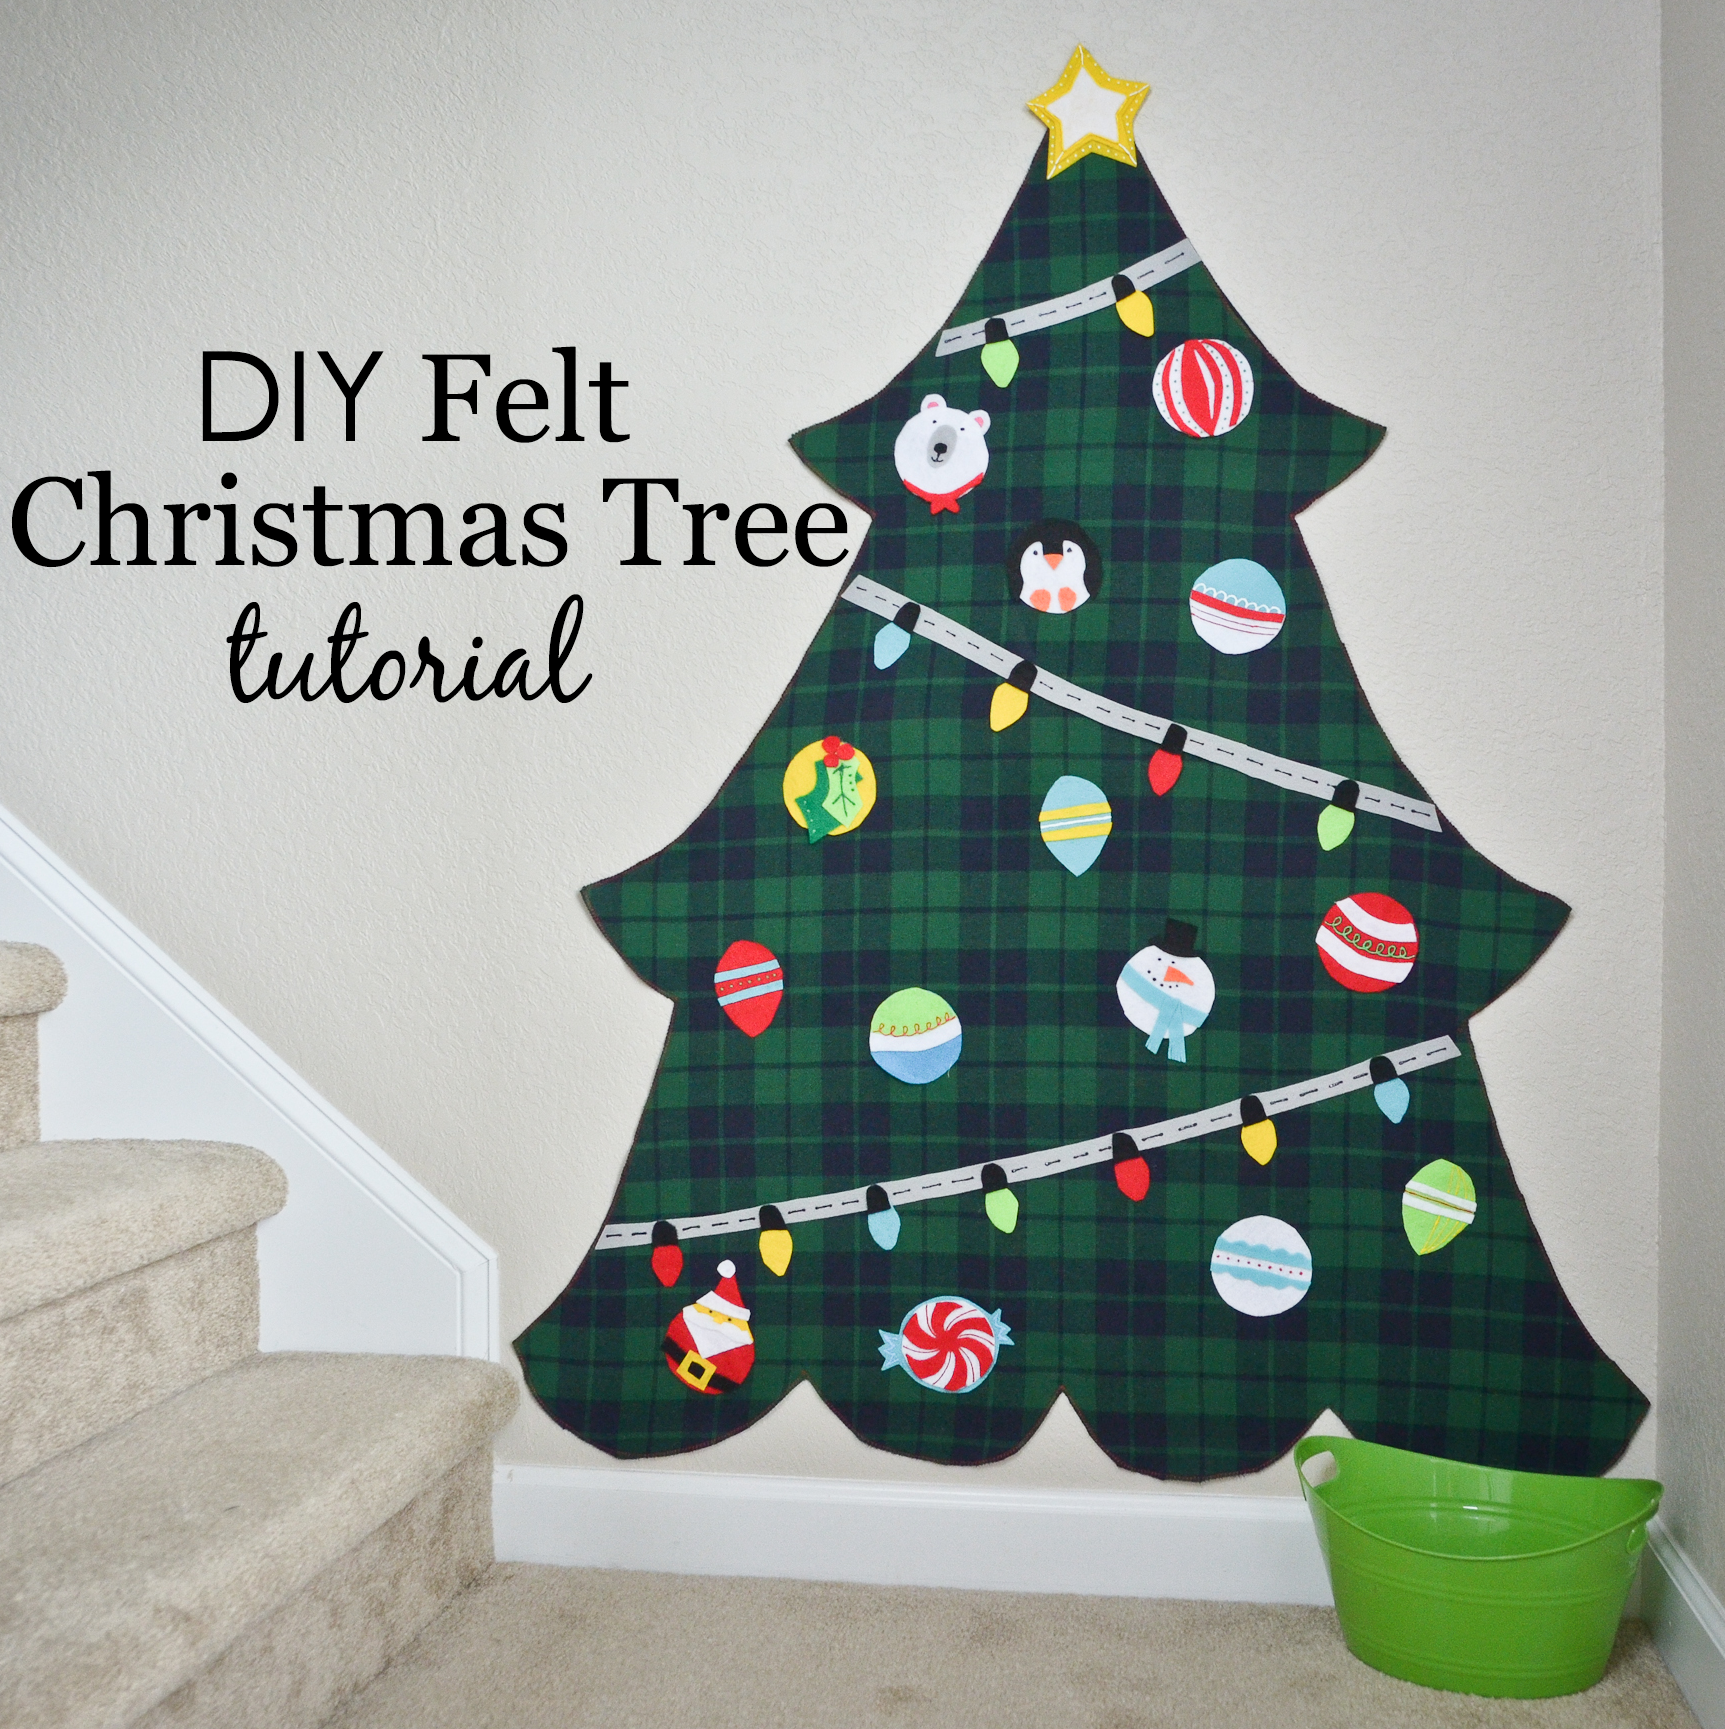 DIY Felt Christmas Tree Tutorial